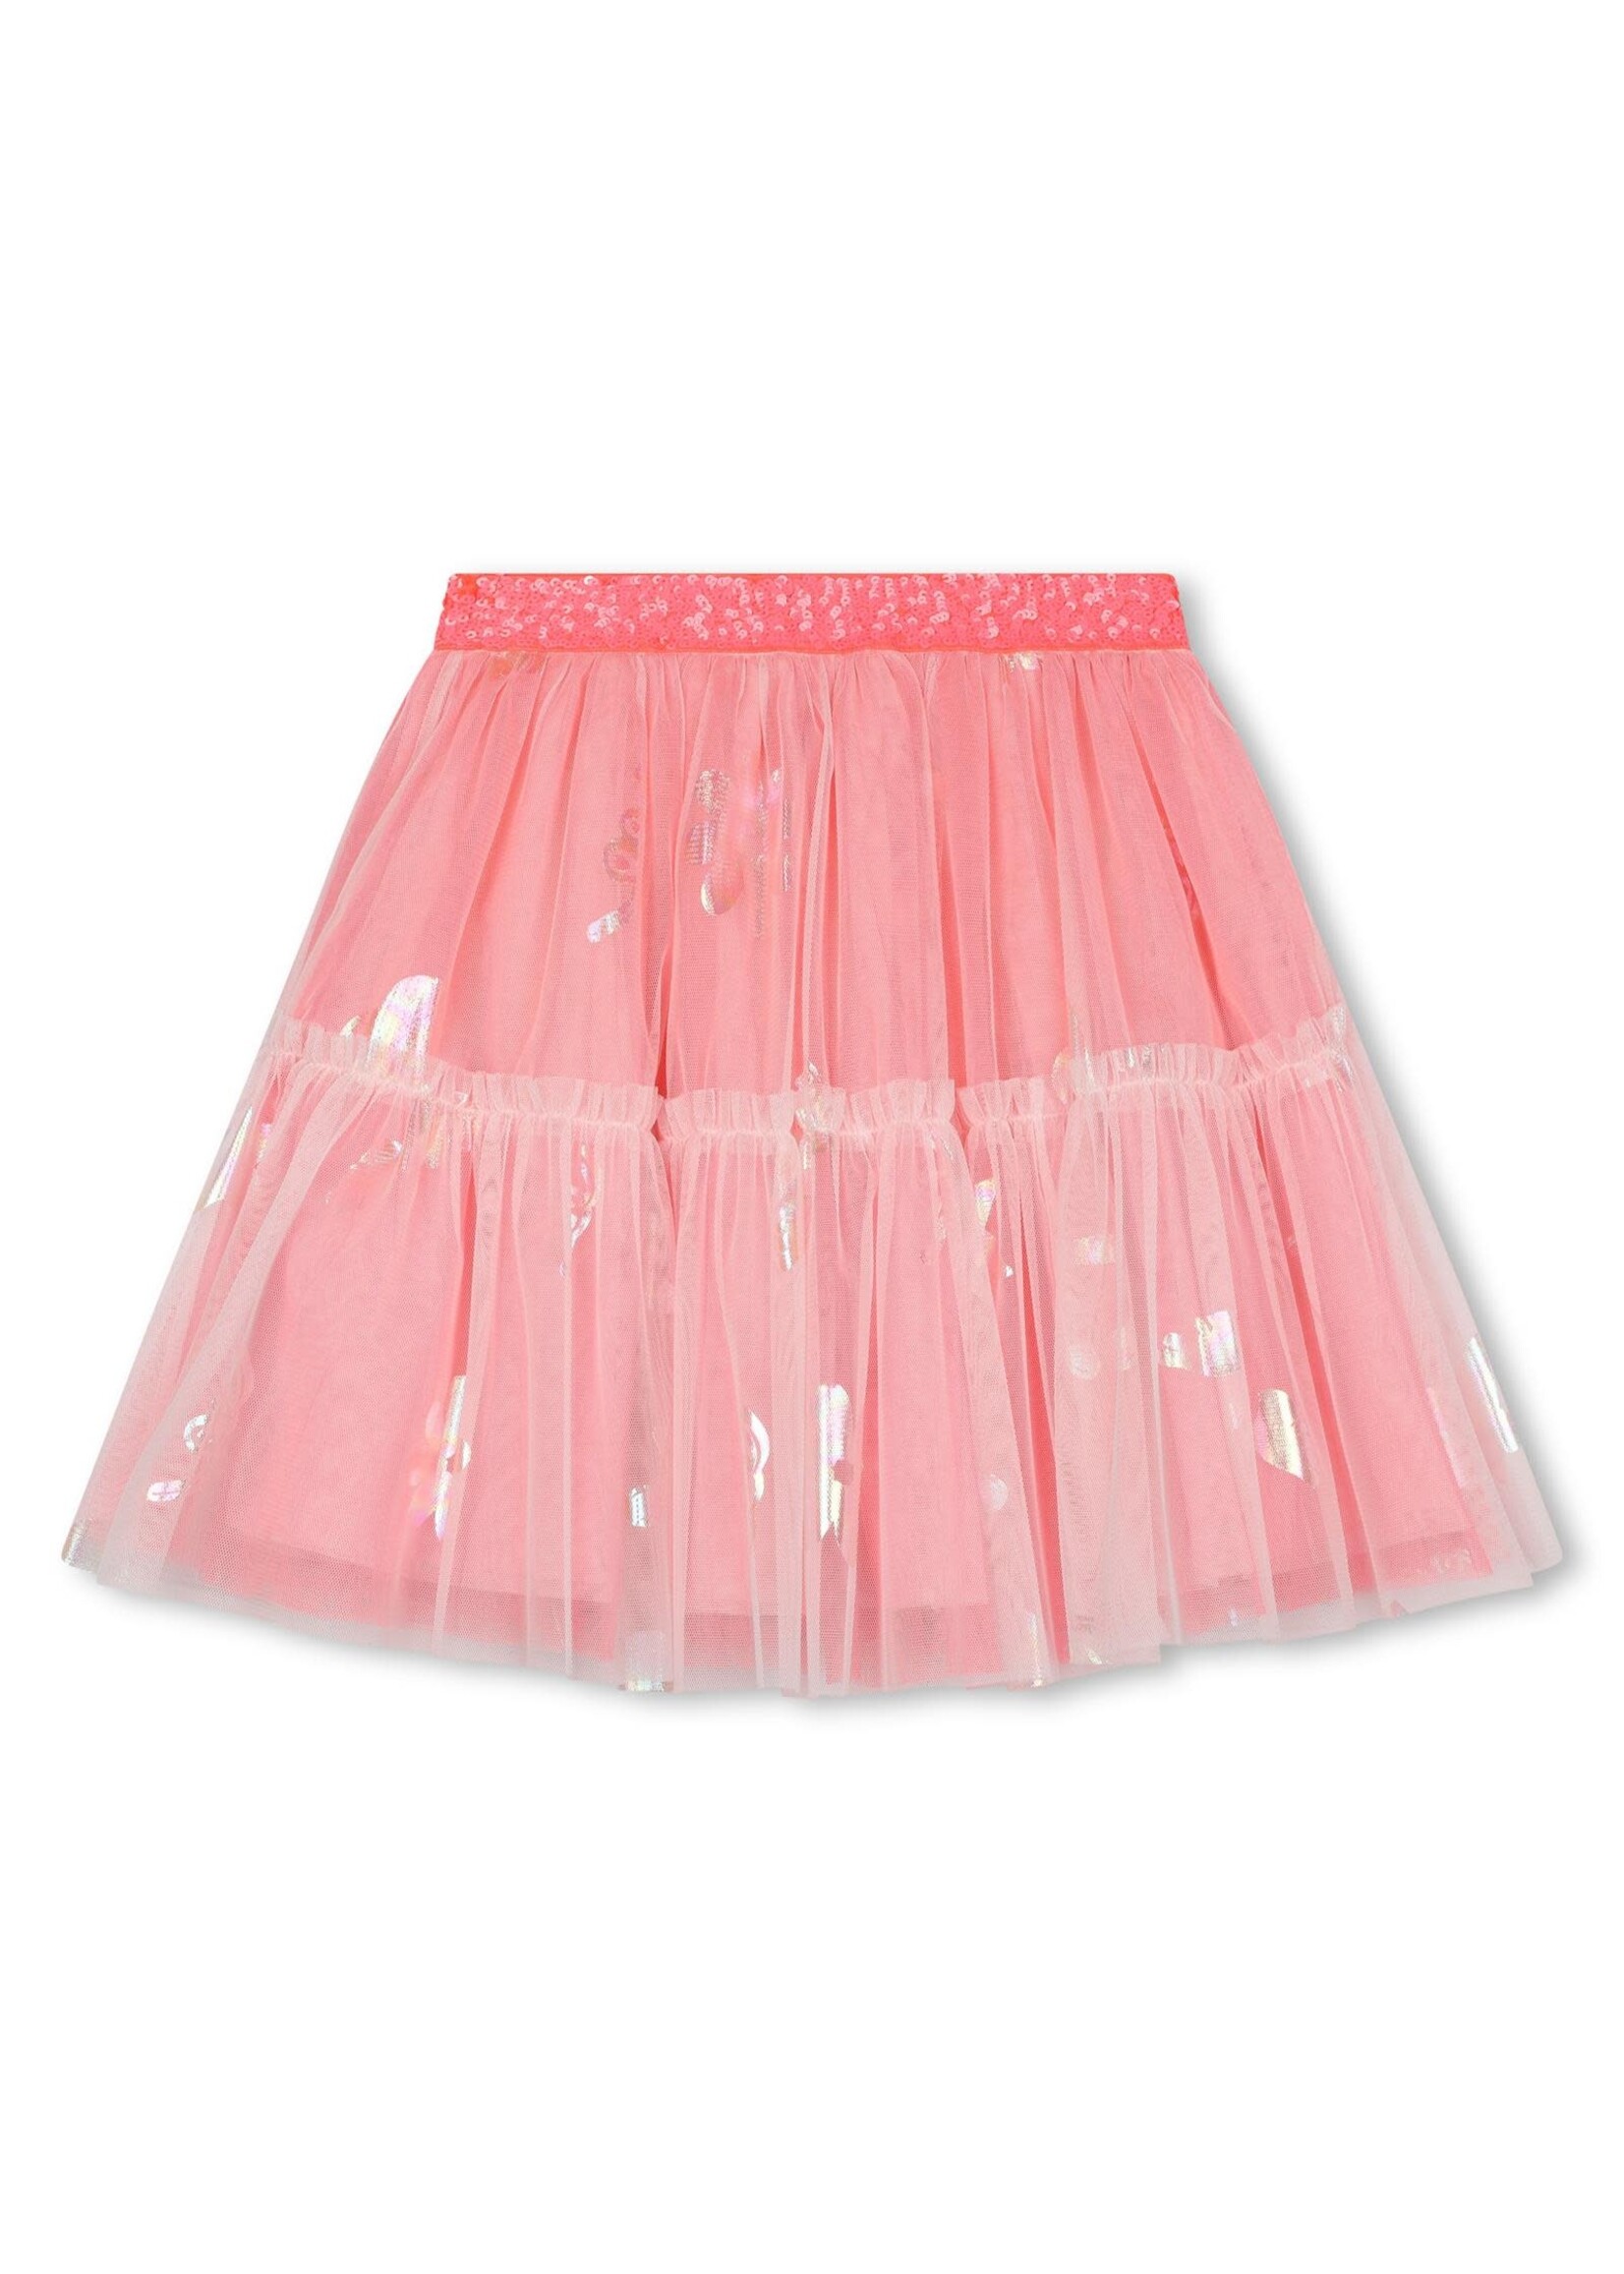 Billie Blush Skirt Glitter Pink - Billie Blush